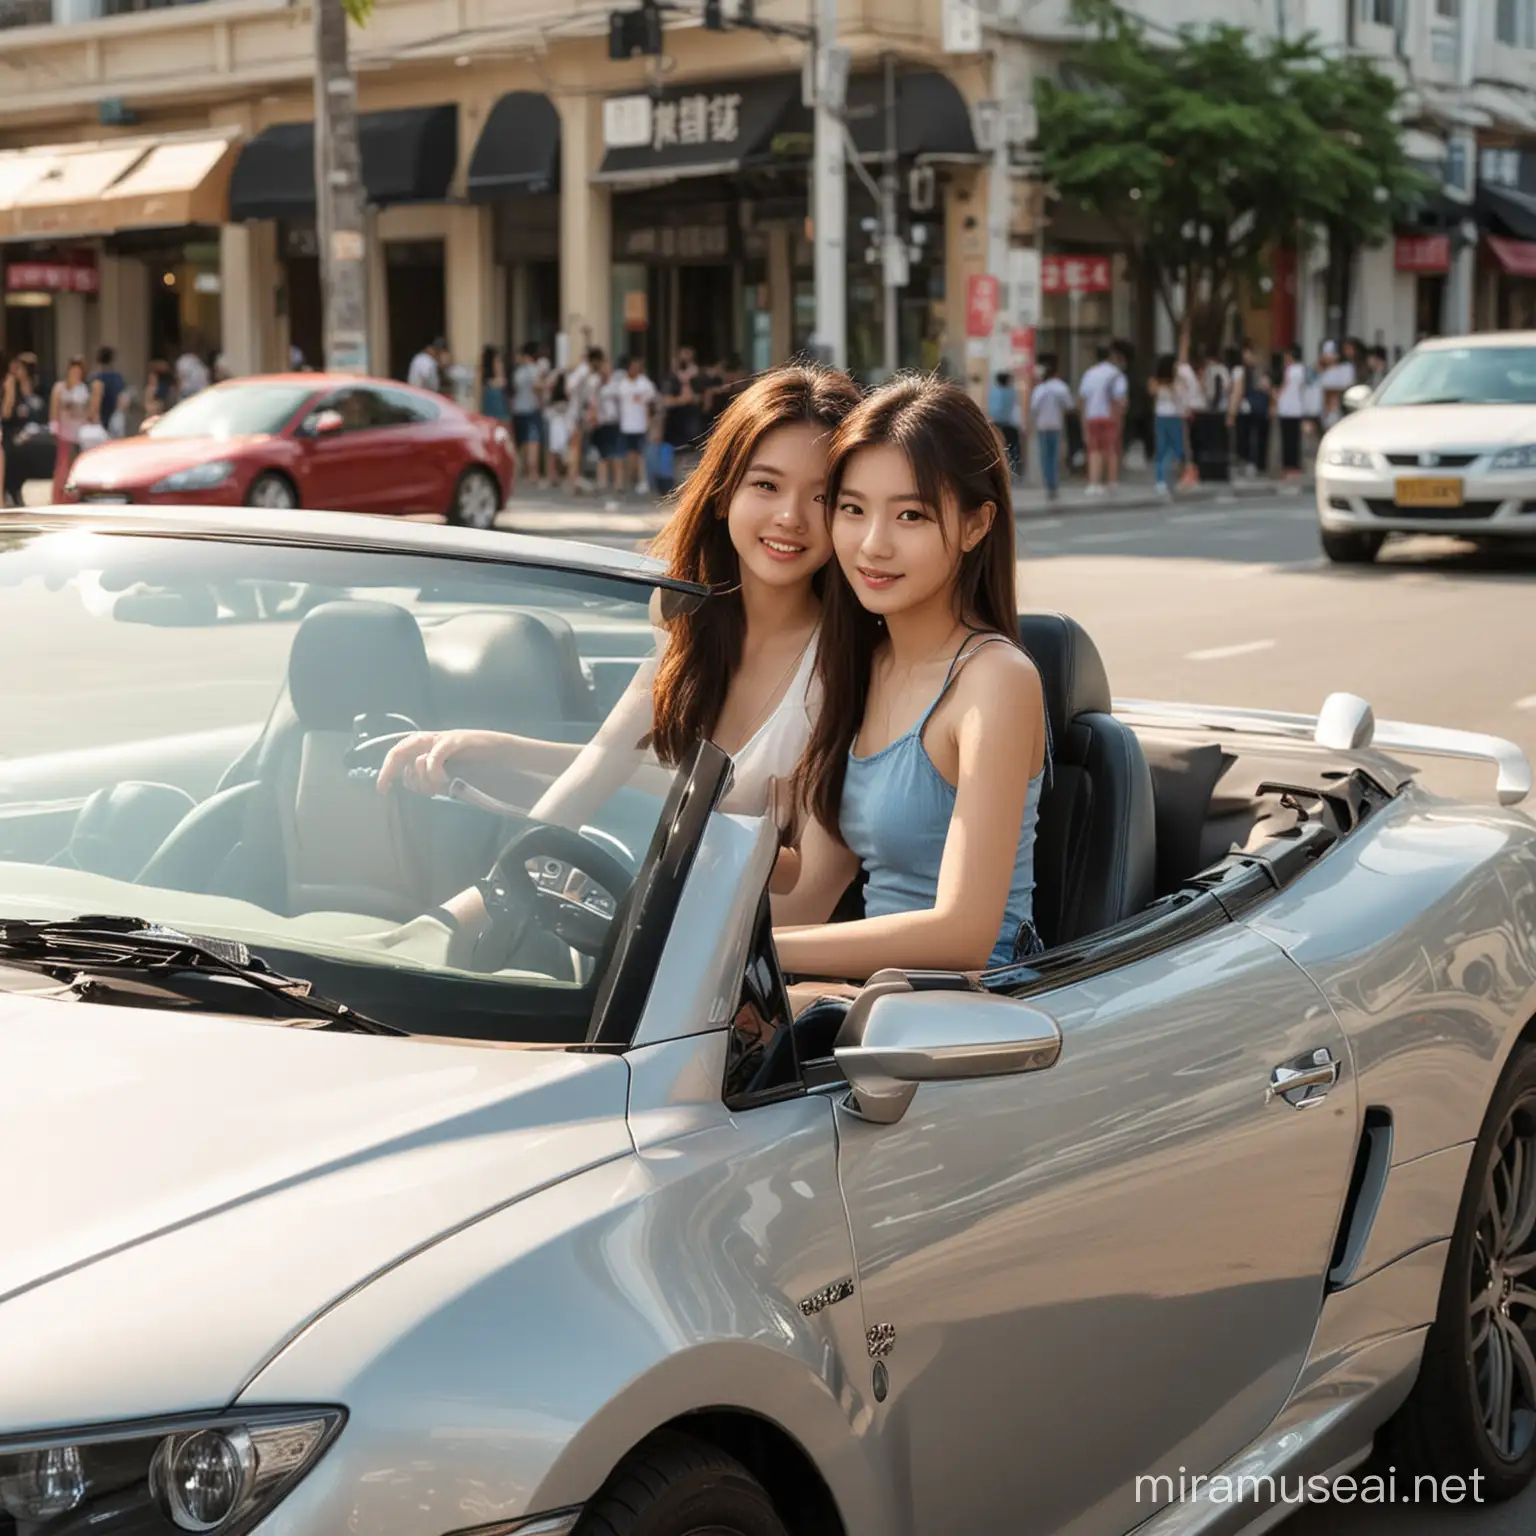 Stylish Asian Teen Leads in Sports Car Joy Ride through Urban Streets